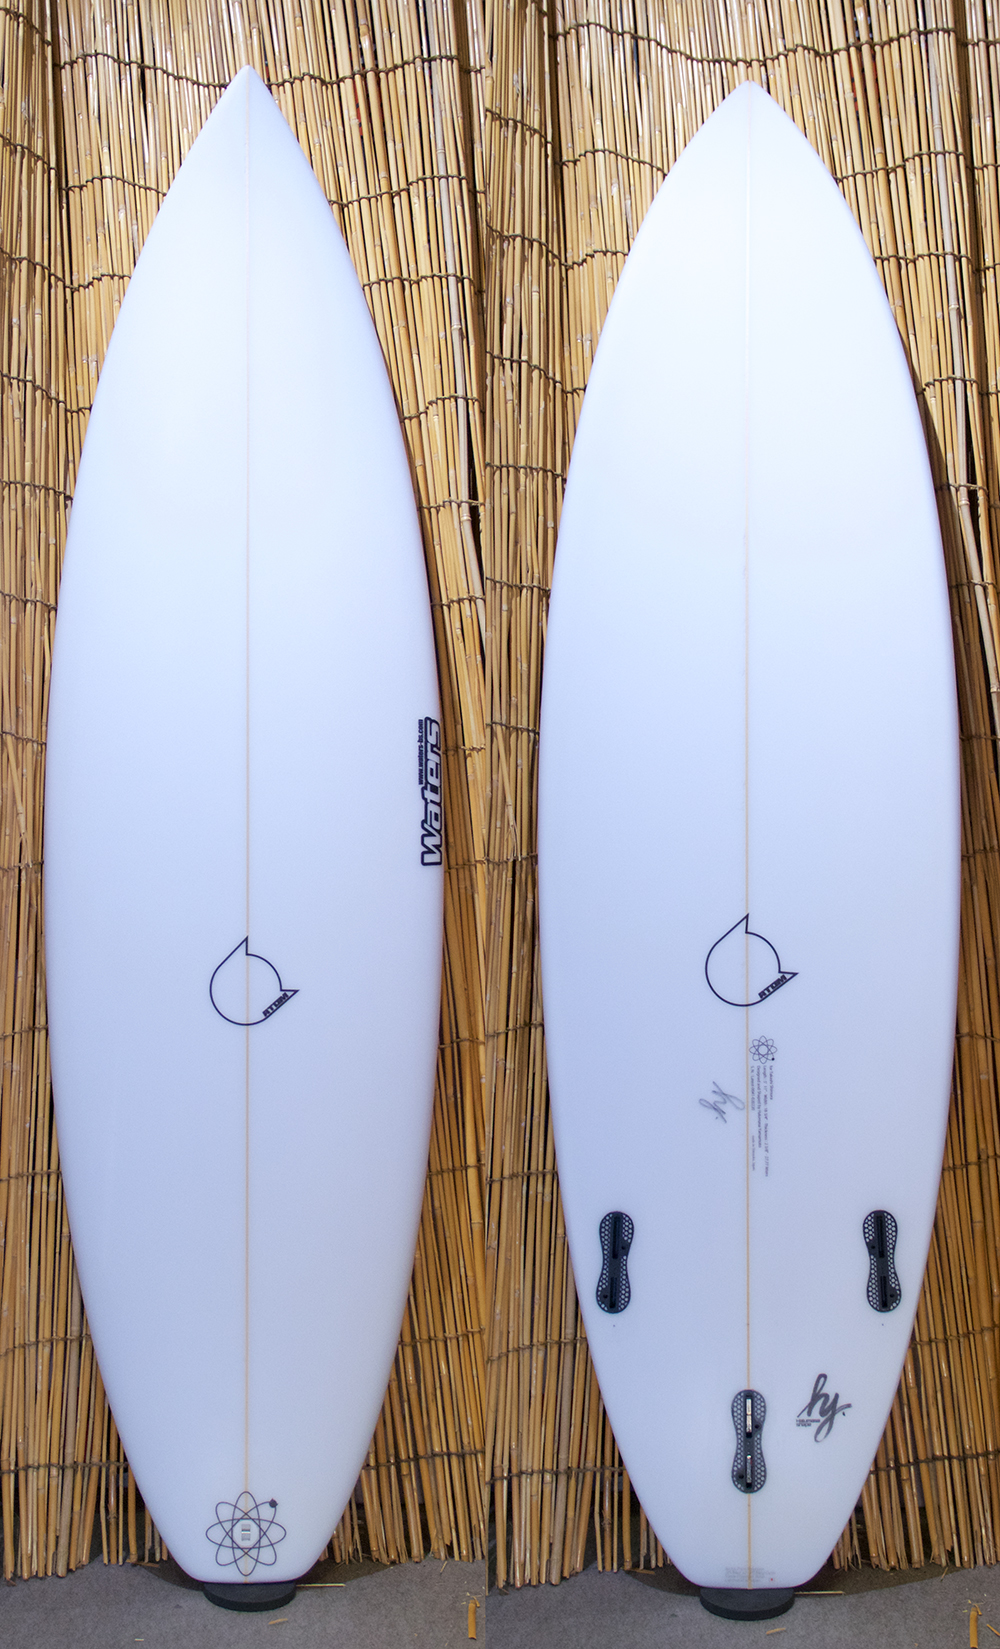 ATOM Surfboard Latest2.0 model